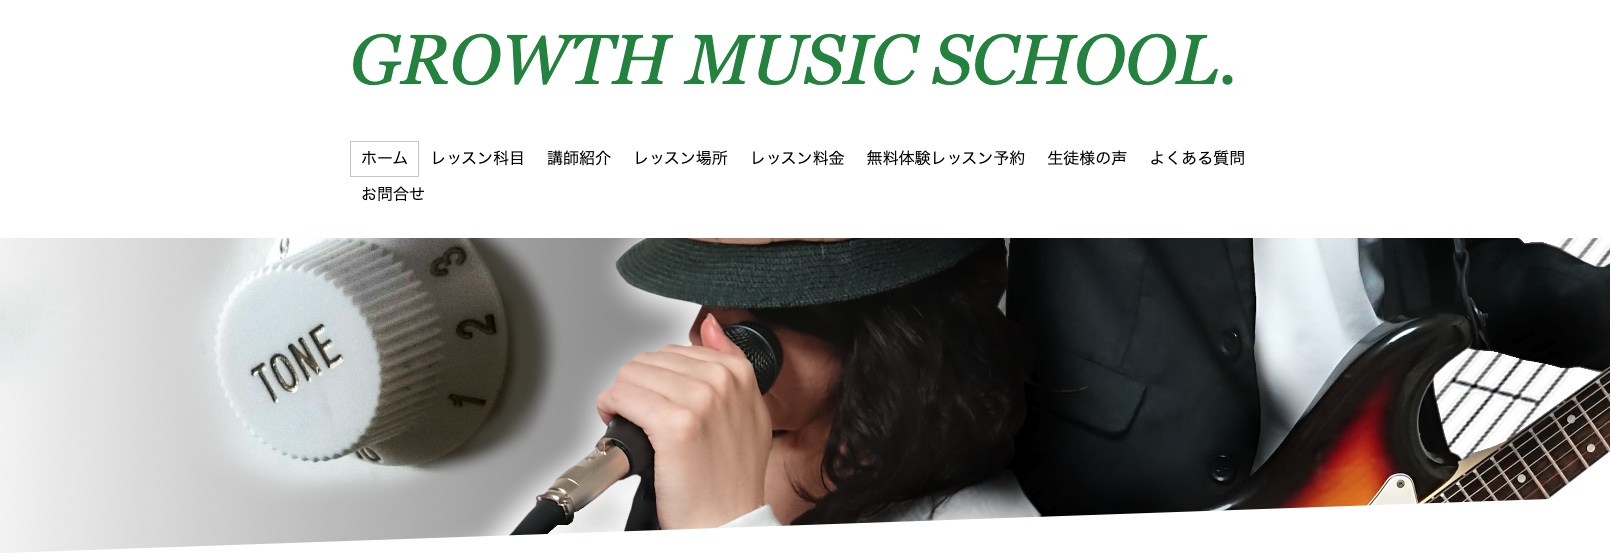 Growth Music School